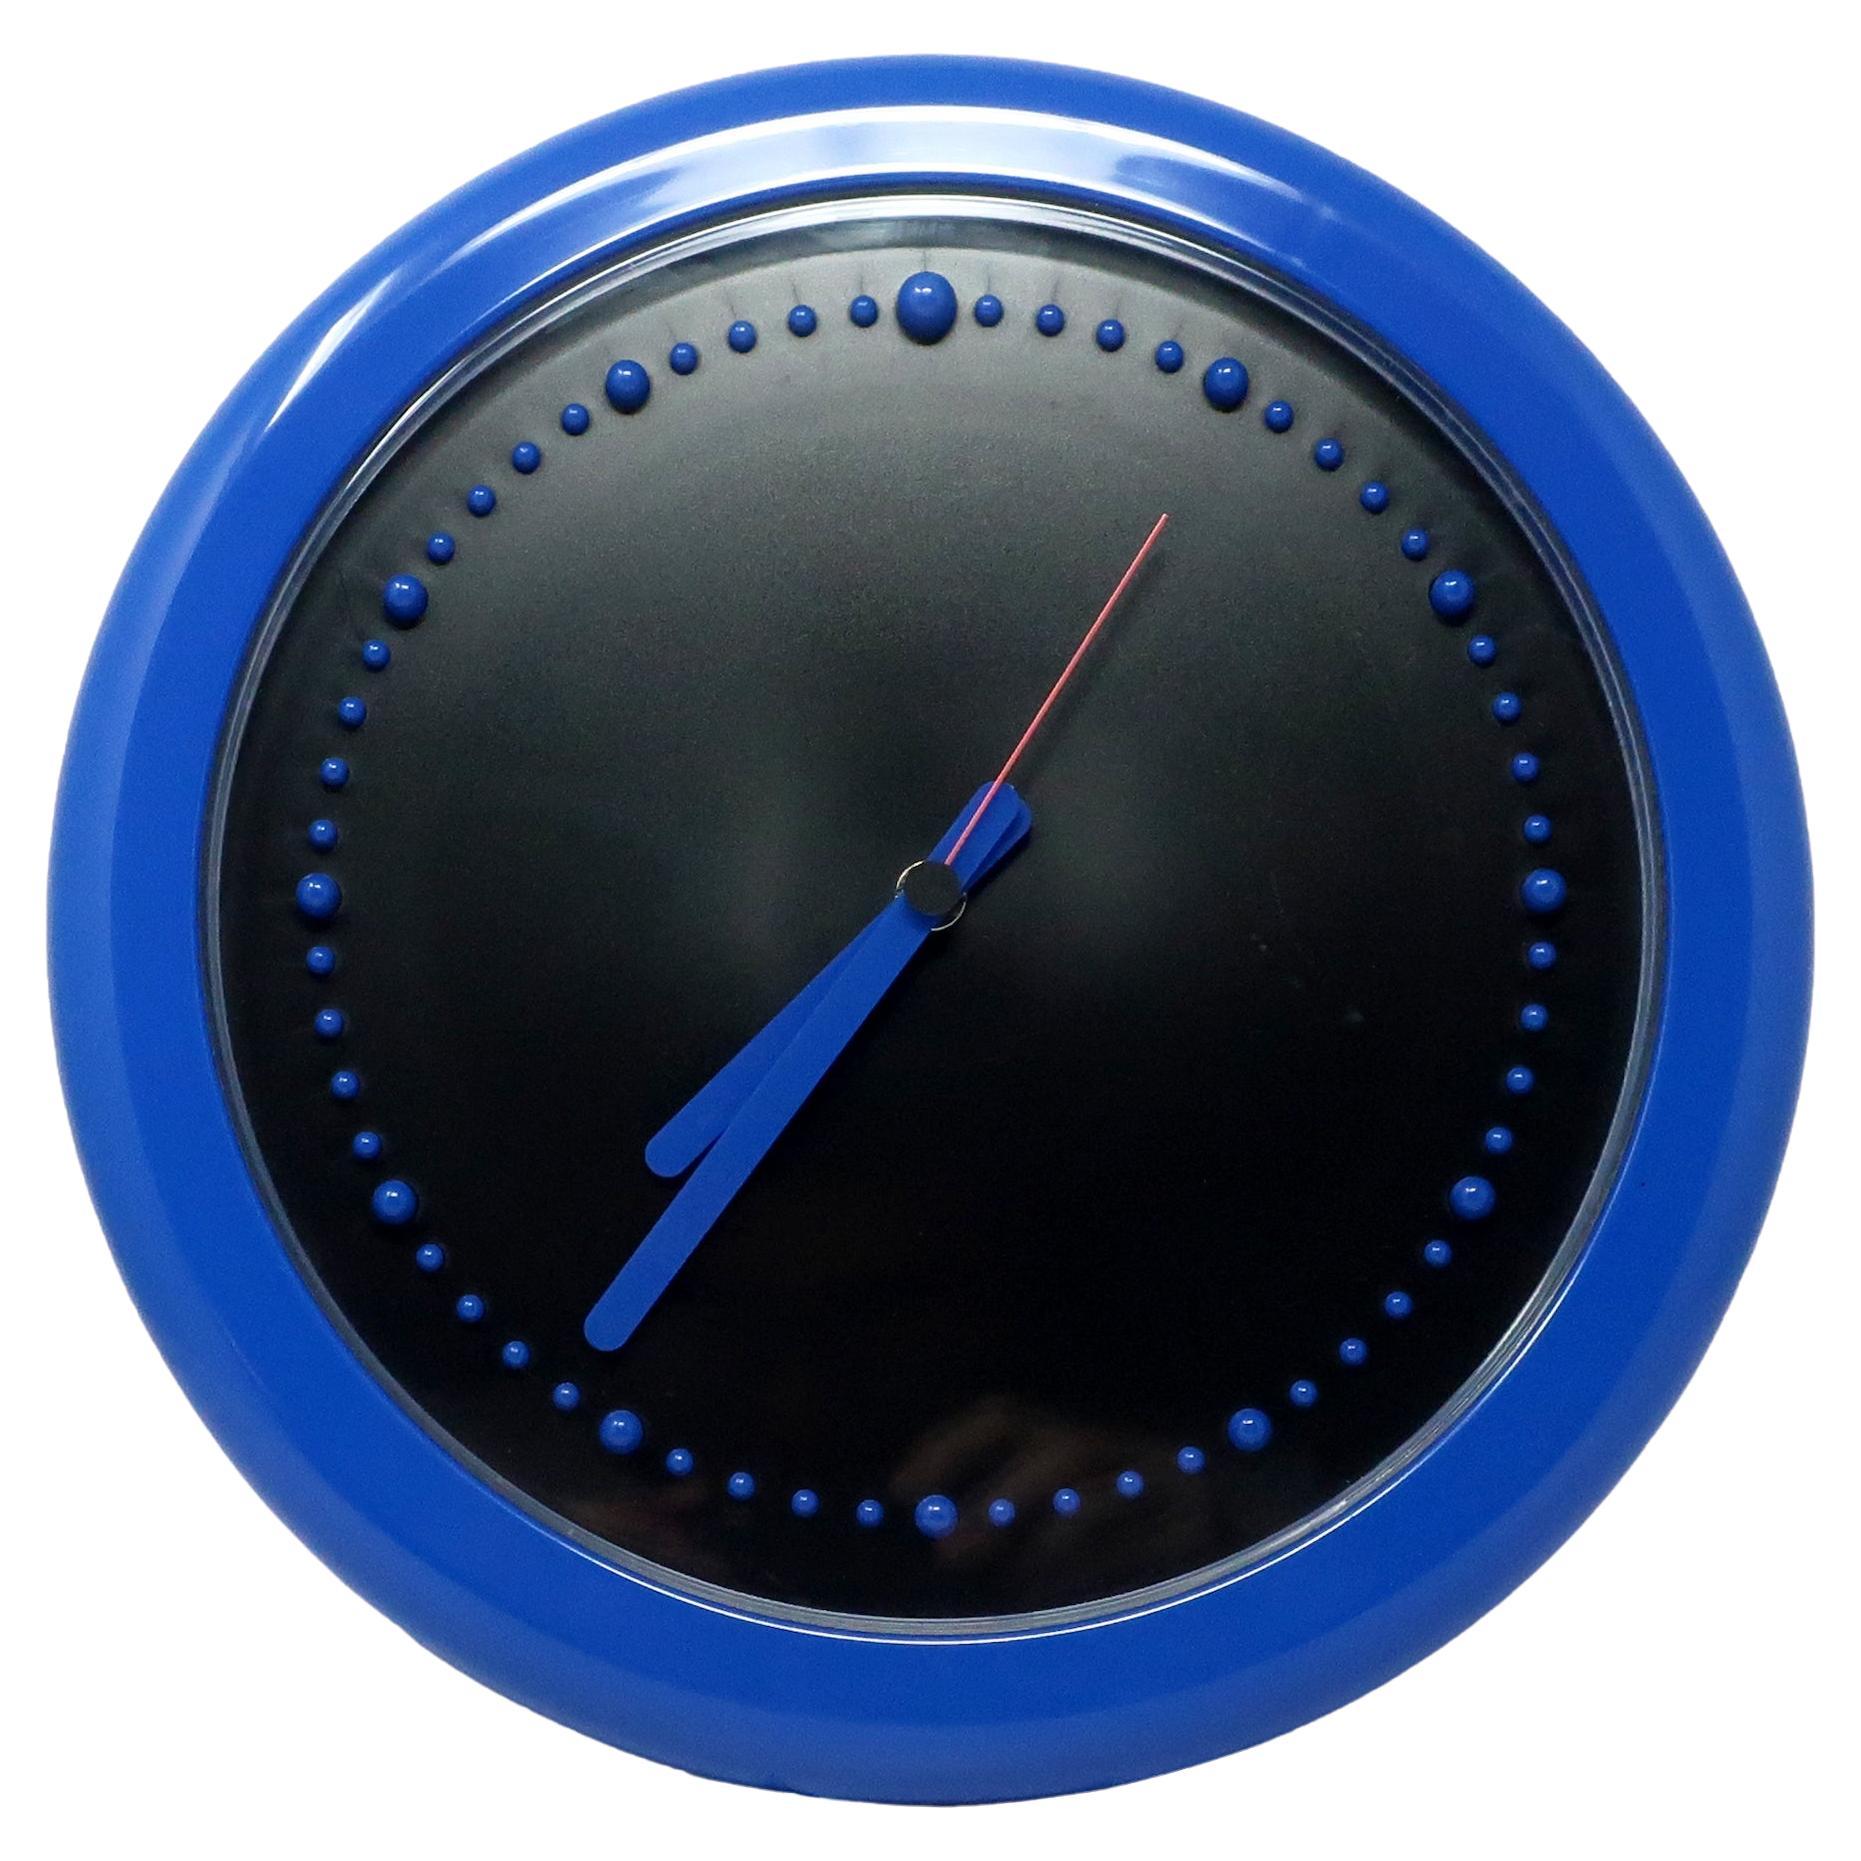 1980s Postmodern Black and Blue Rexite Zero 980 Wall Clock